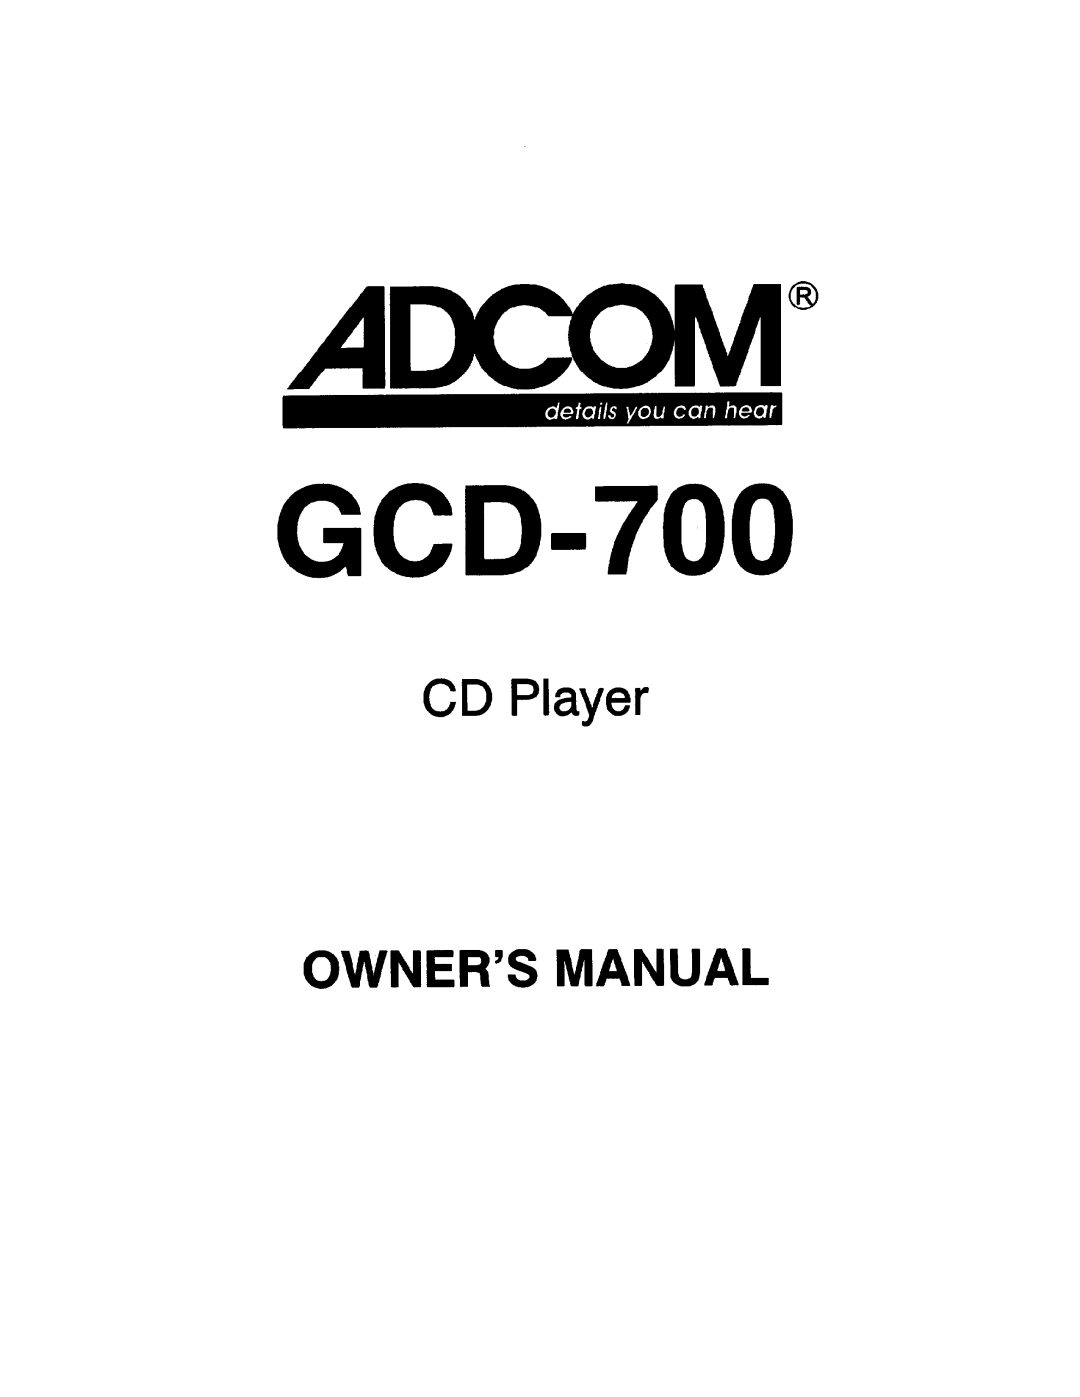 Adcom GCD-700 manual 